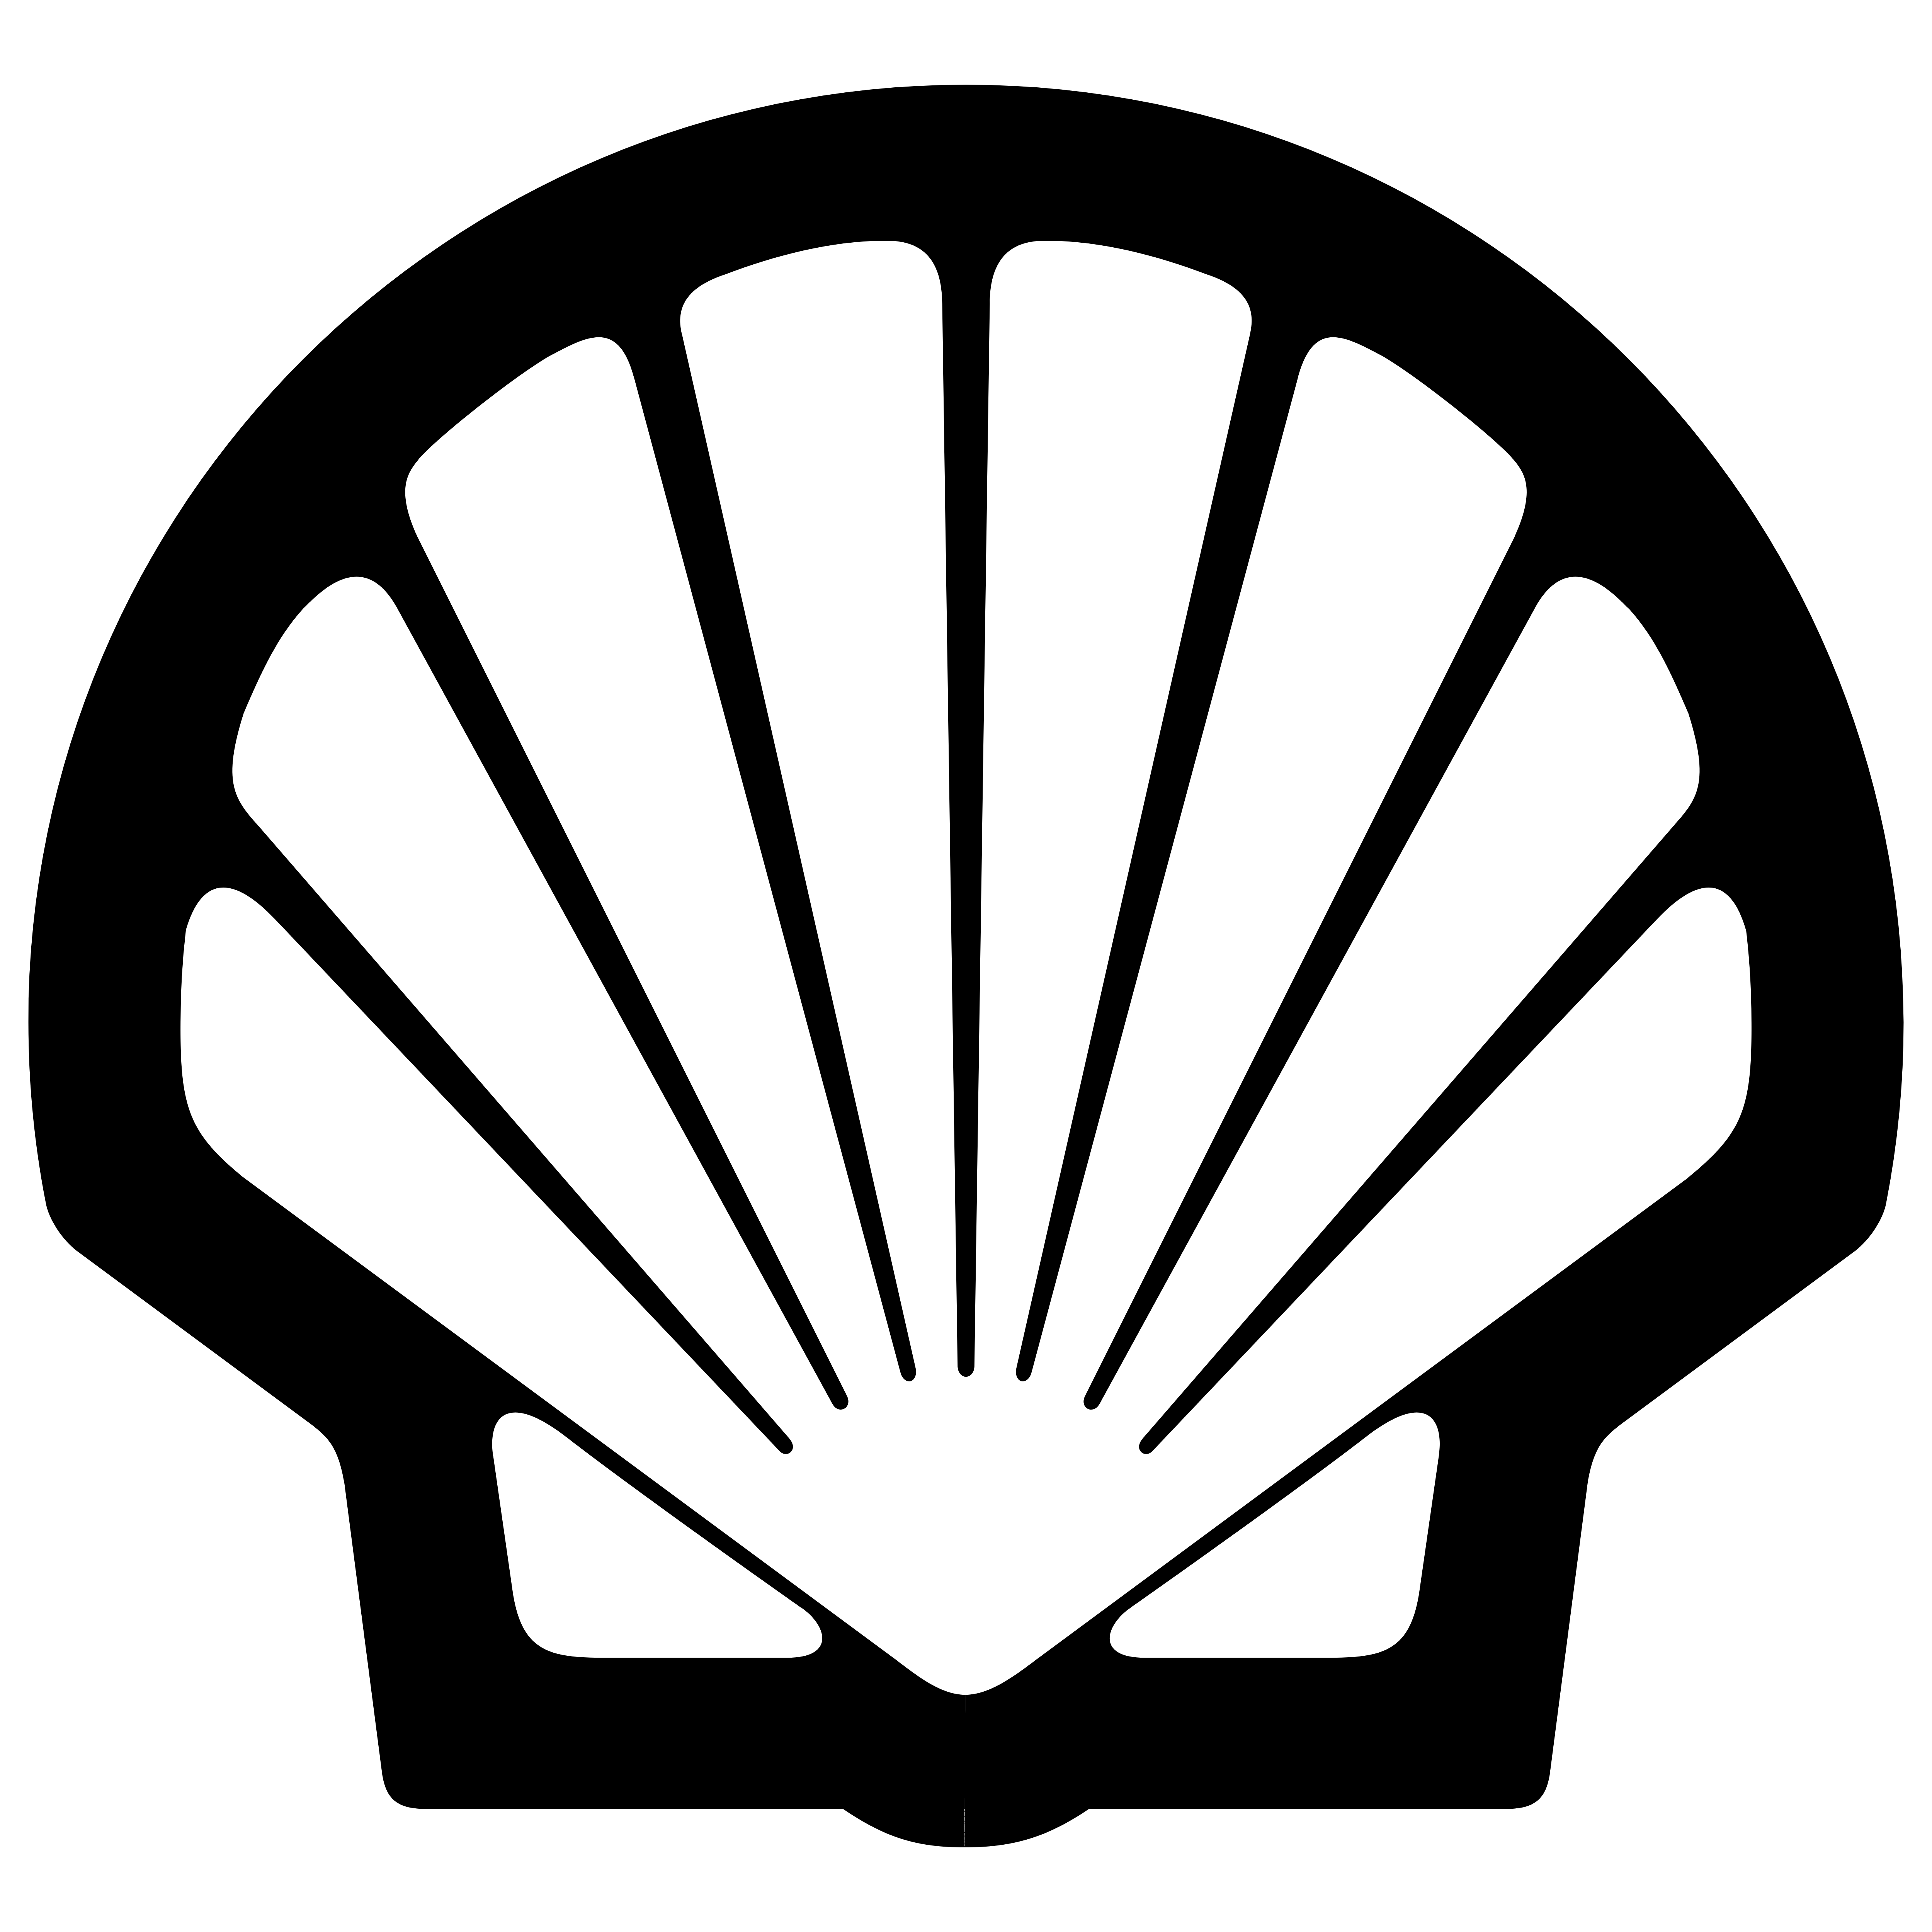 Shell Logo Transparent Png - 